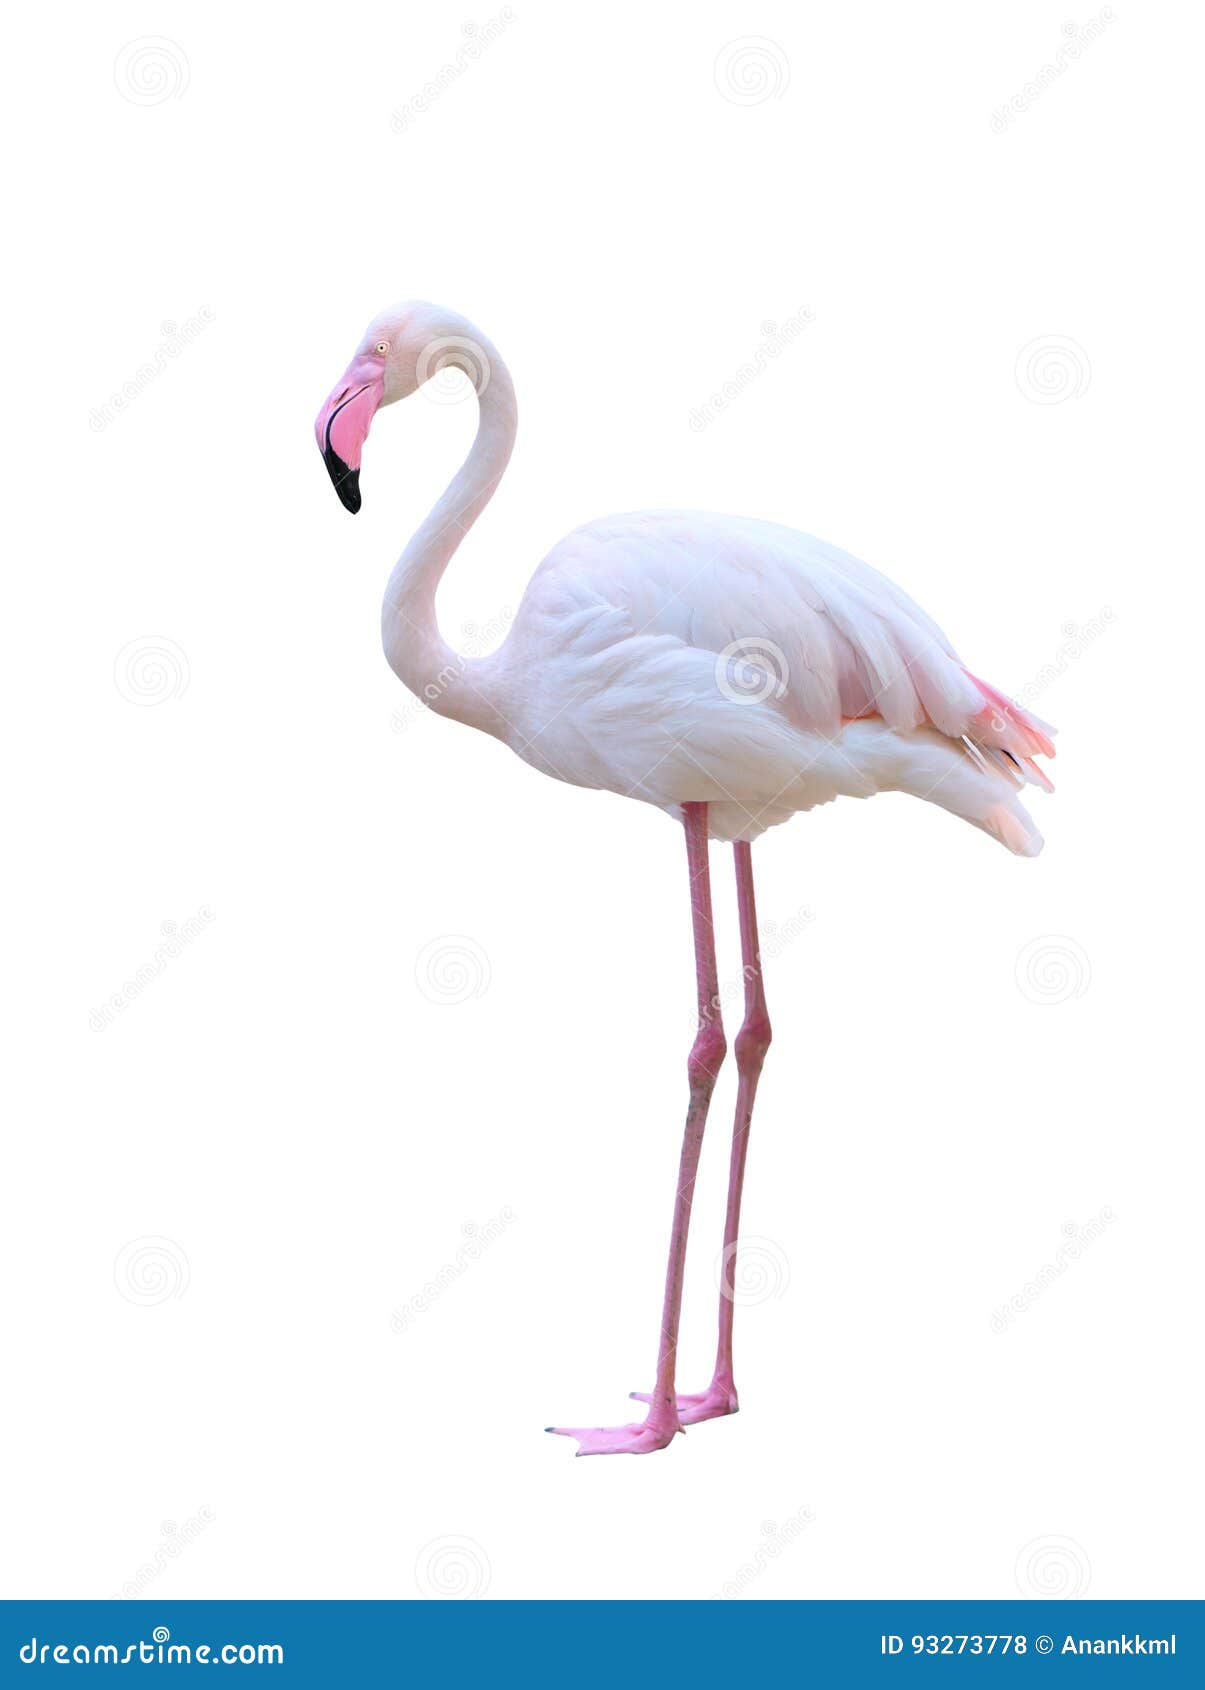 greater flamingo  on white background